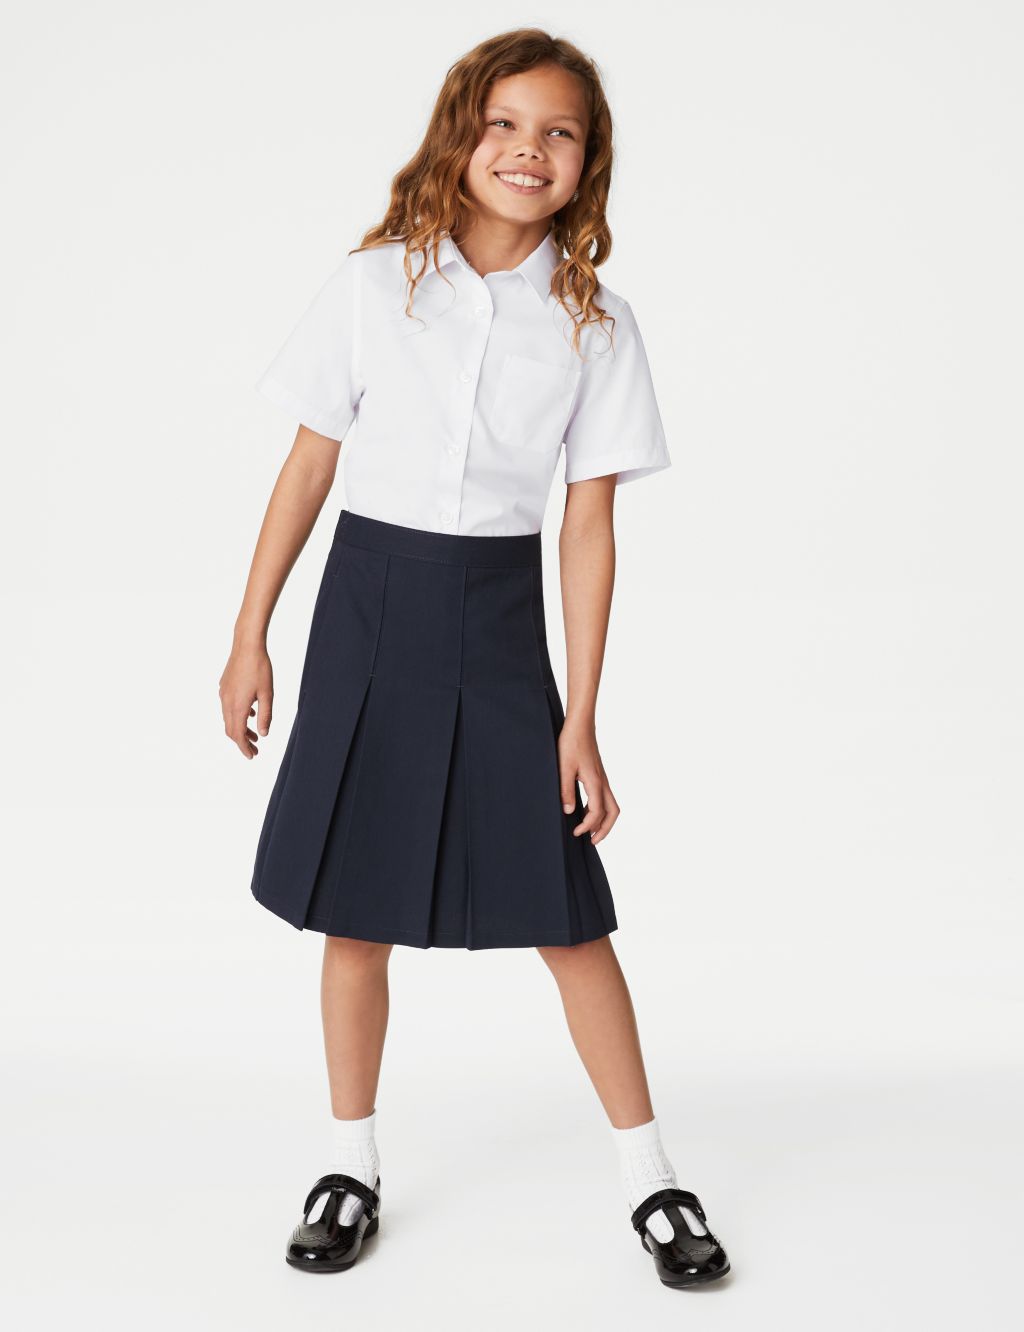 Kid Girls British Style School Uniform Jacket Skirt Shirt Tie